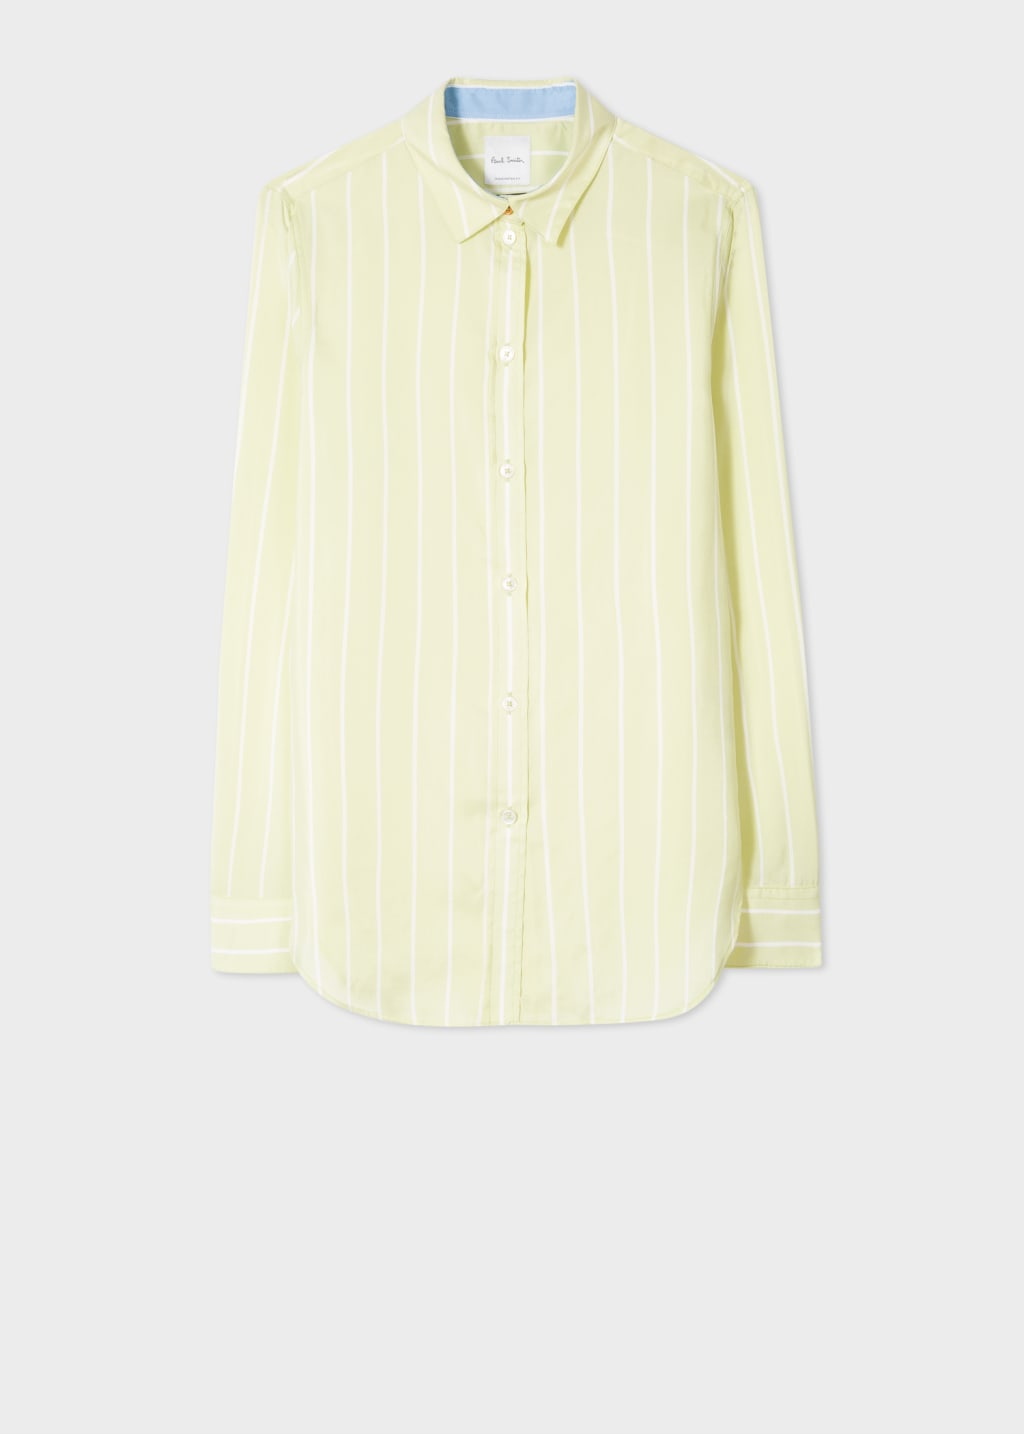 Women's Yellow Stripe Silk Shirt